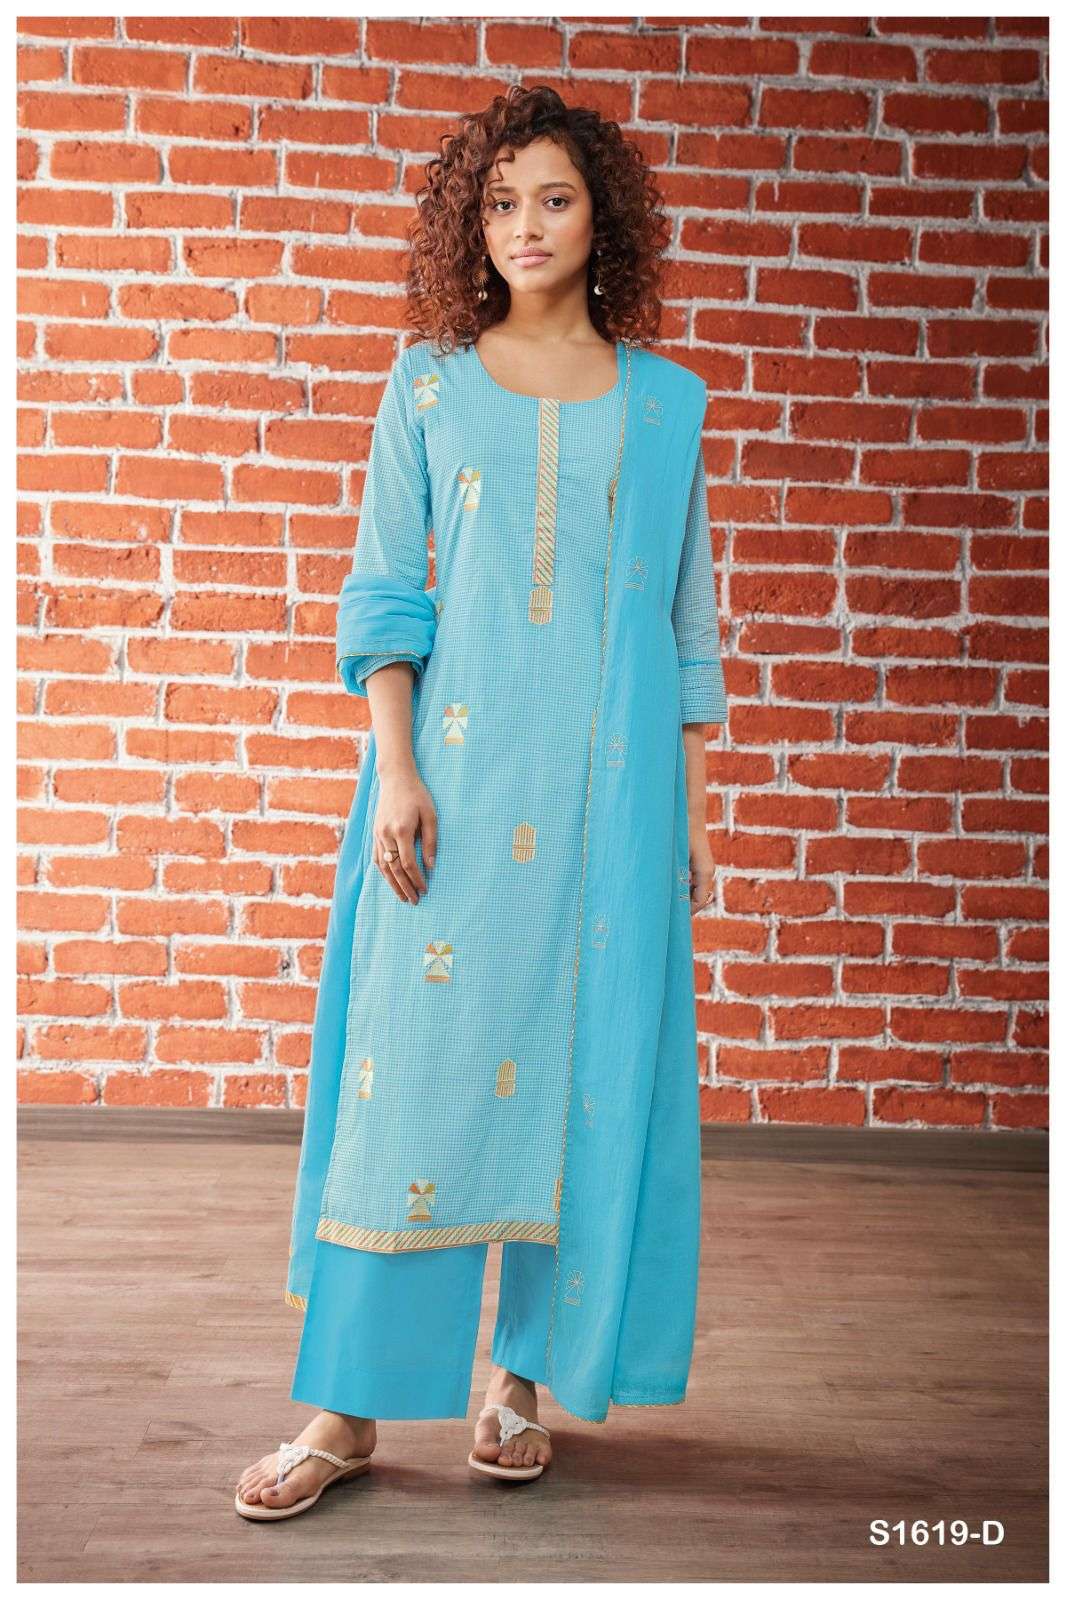 ganga bhavna 1619 series exclusive designer salwar kameez catalogue wholesale price surat 